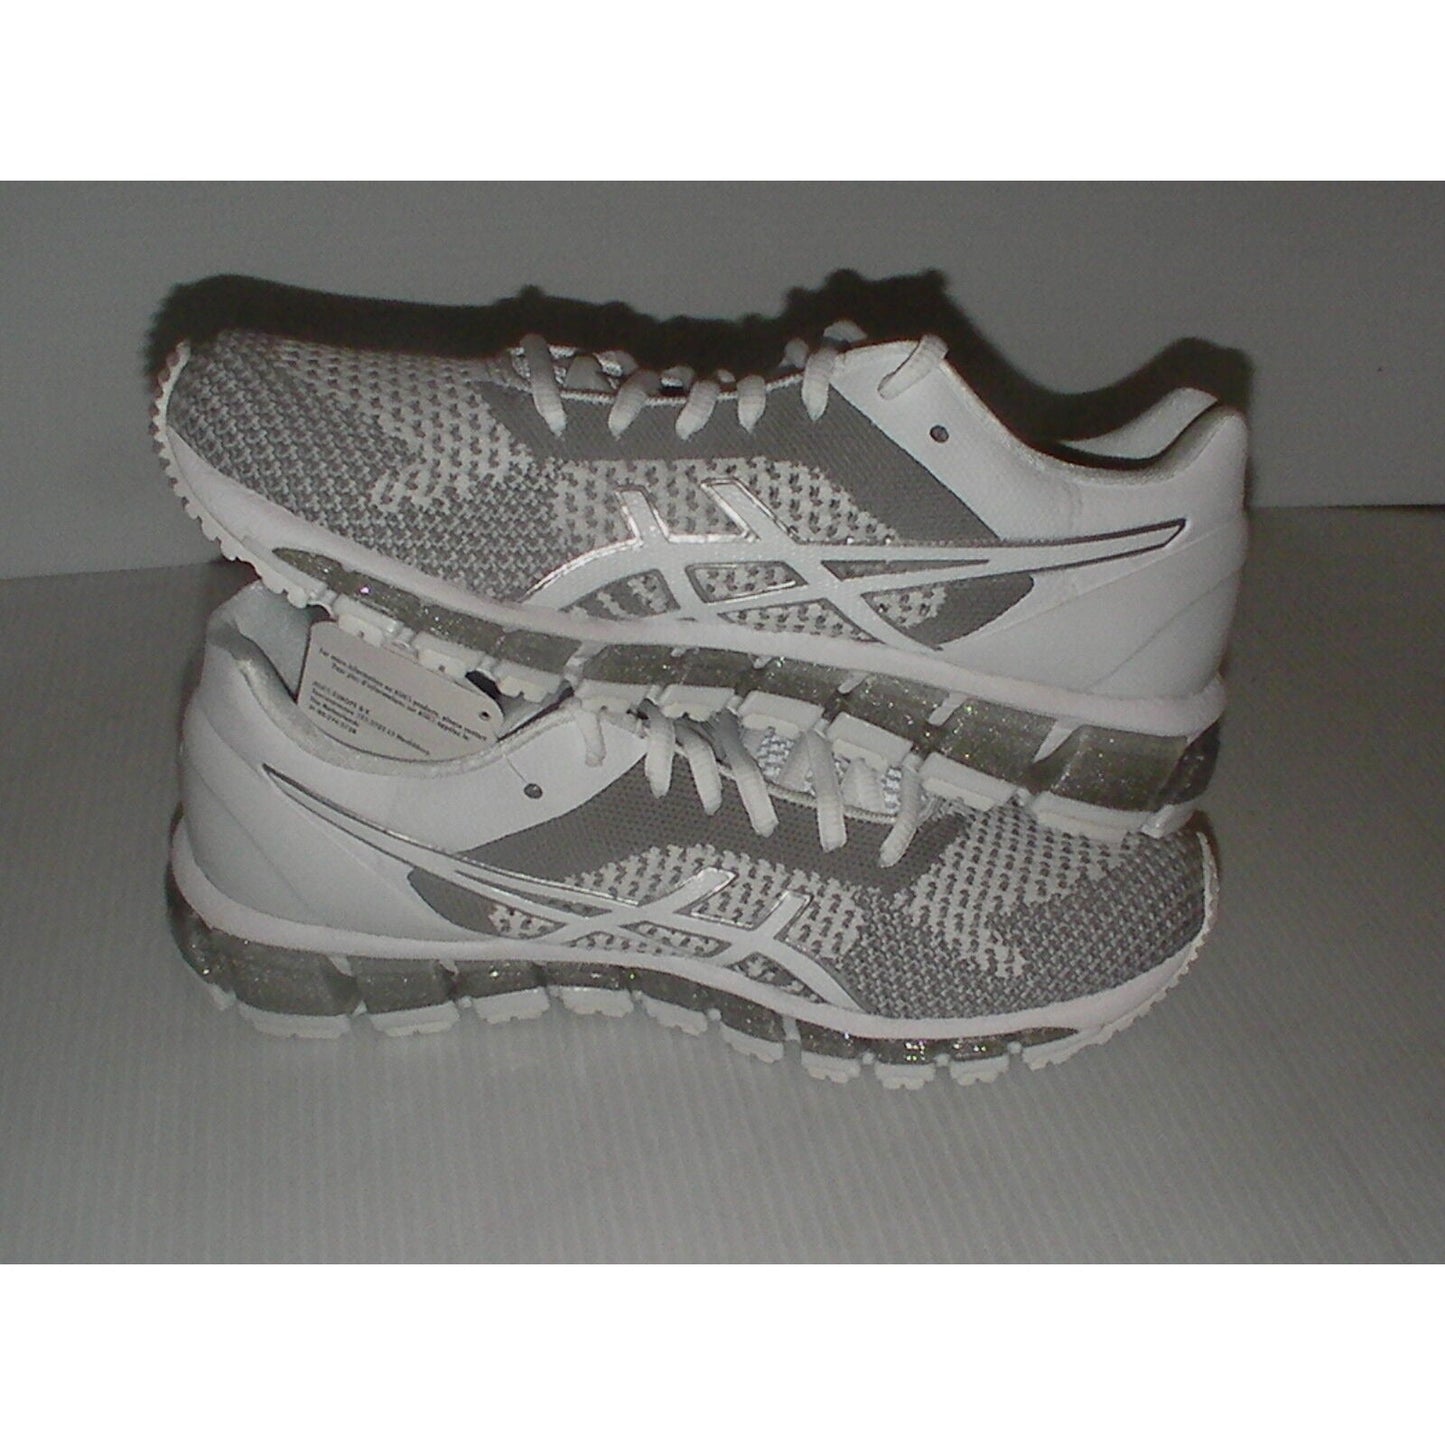 Asics women's running shoes gel quantum 360 knit white snow silver size 8 us - Classic Fashion Deals